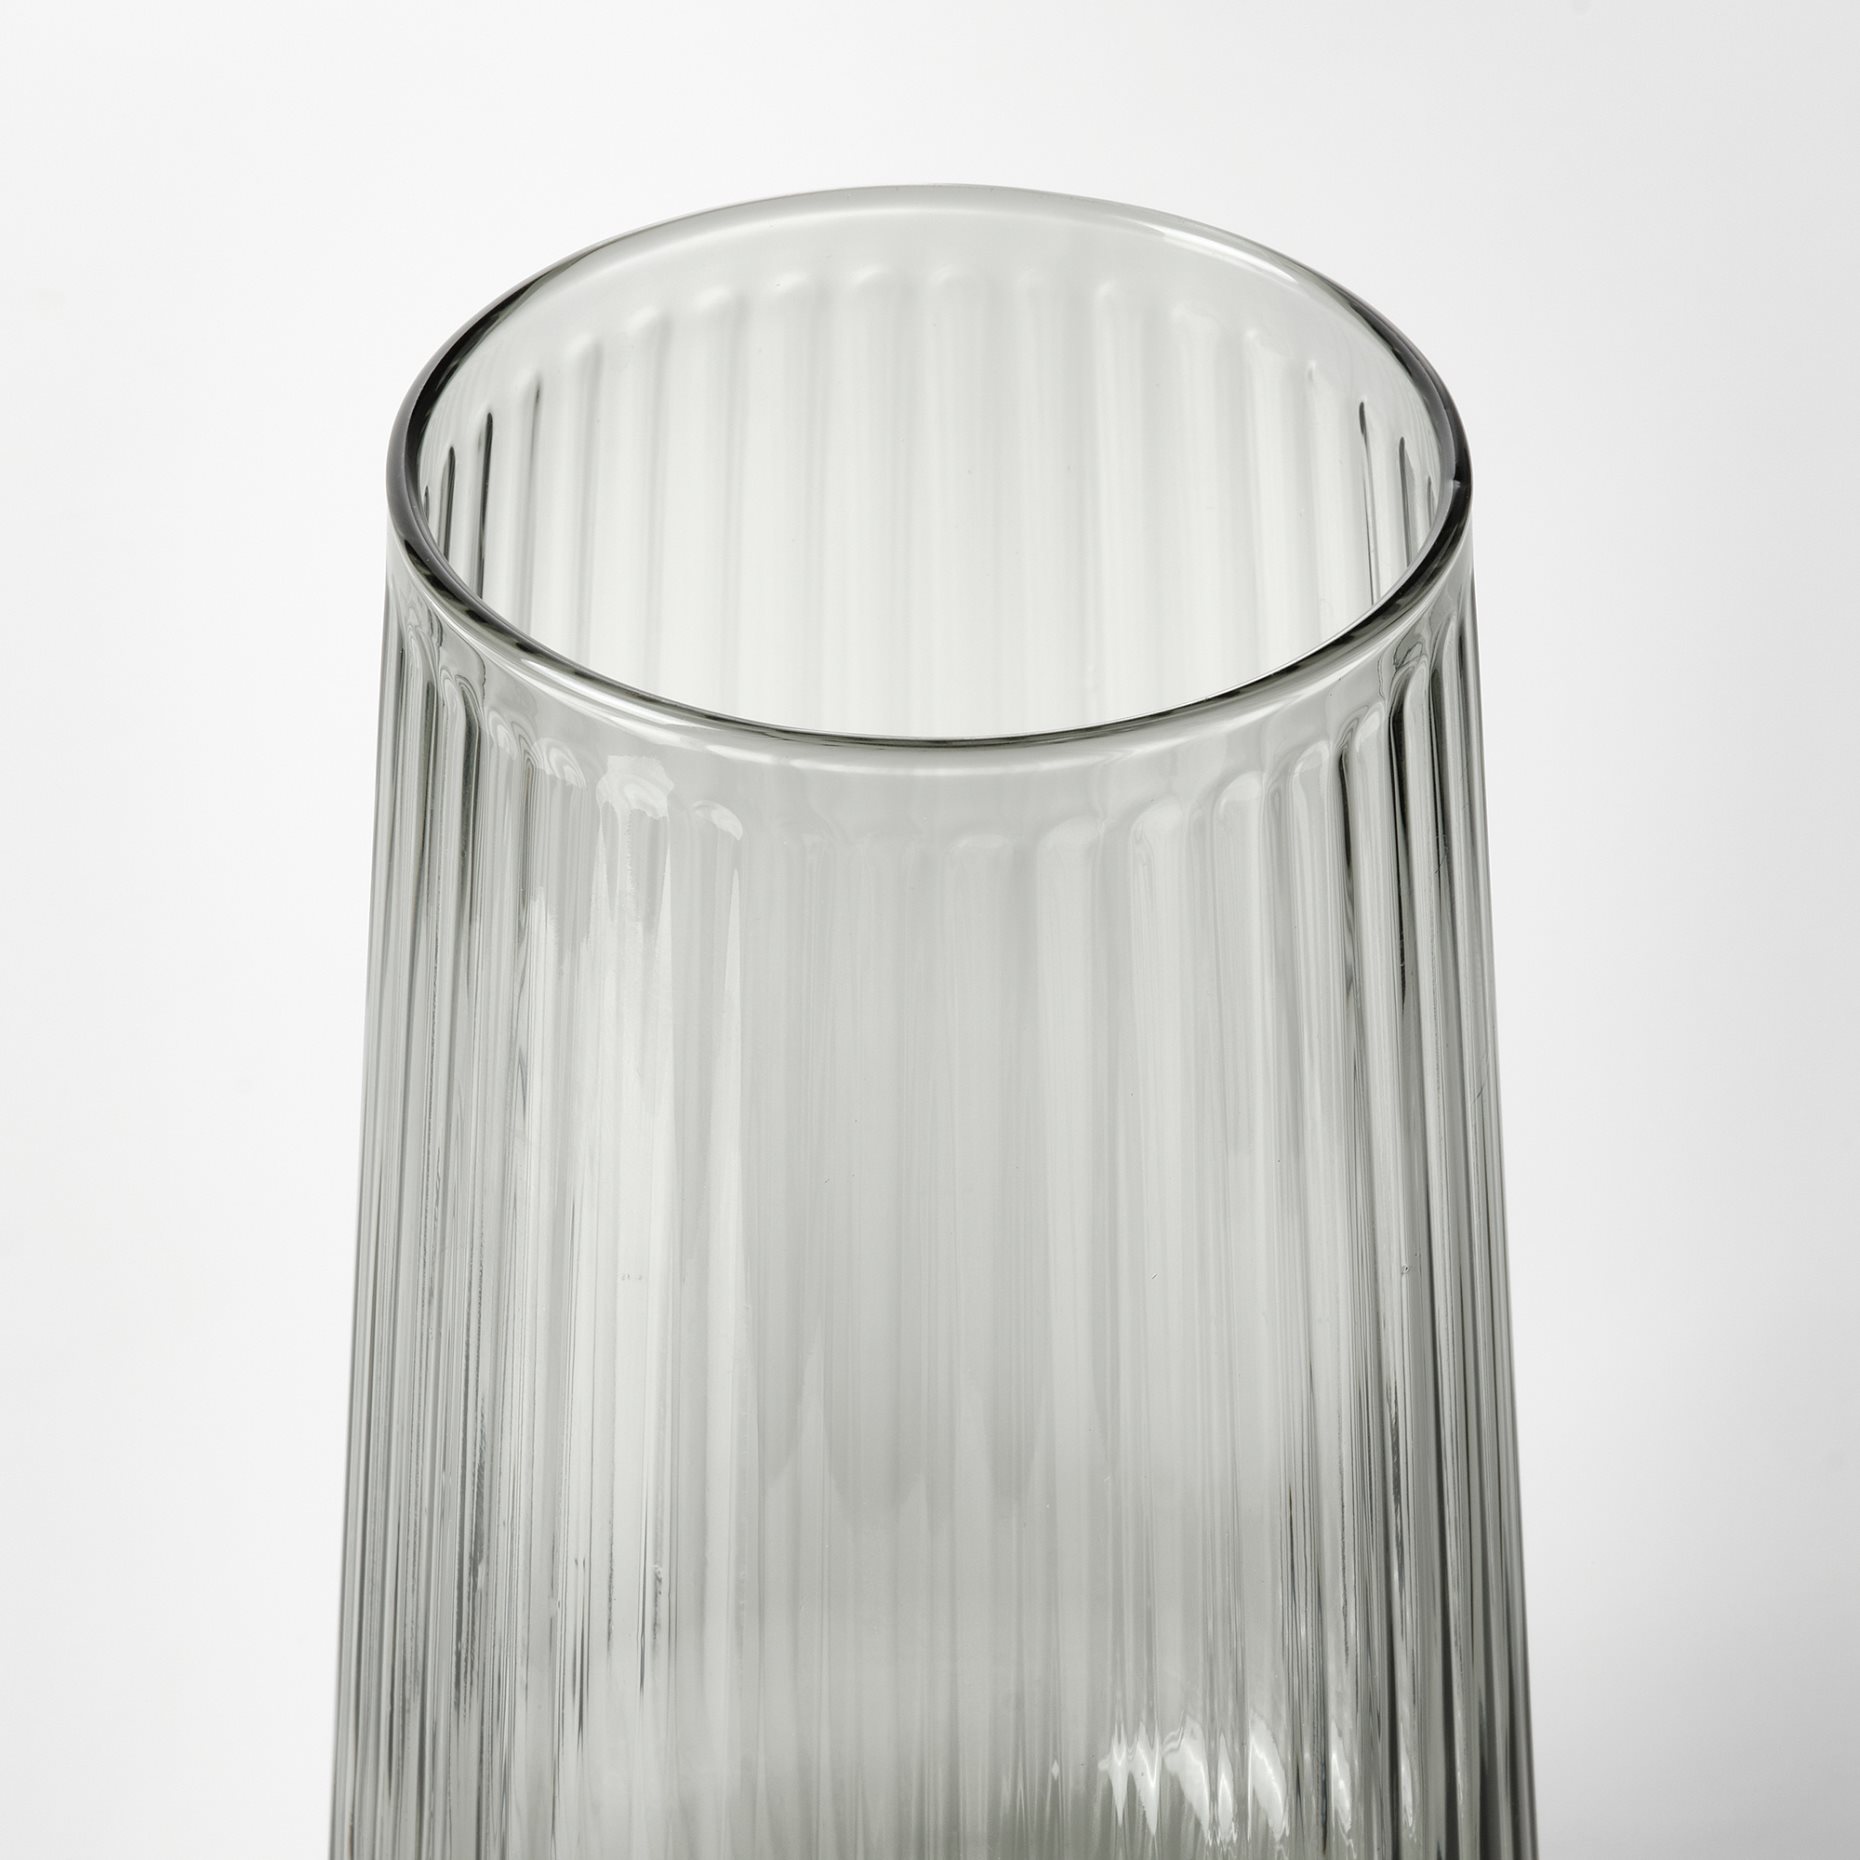 GRADVIS, vase, 19 cm, 805.029.22